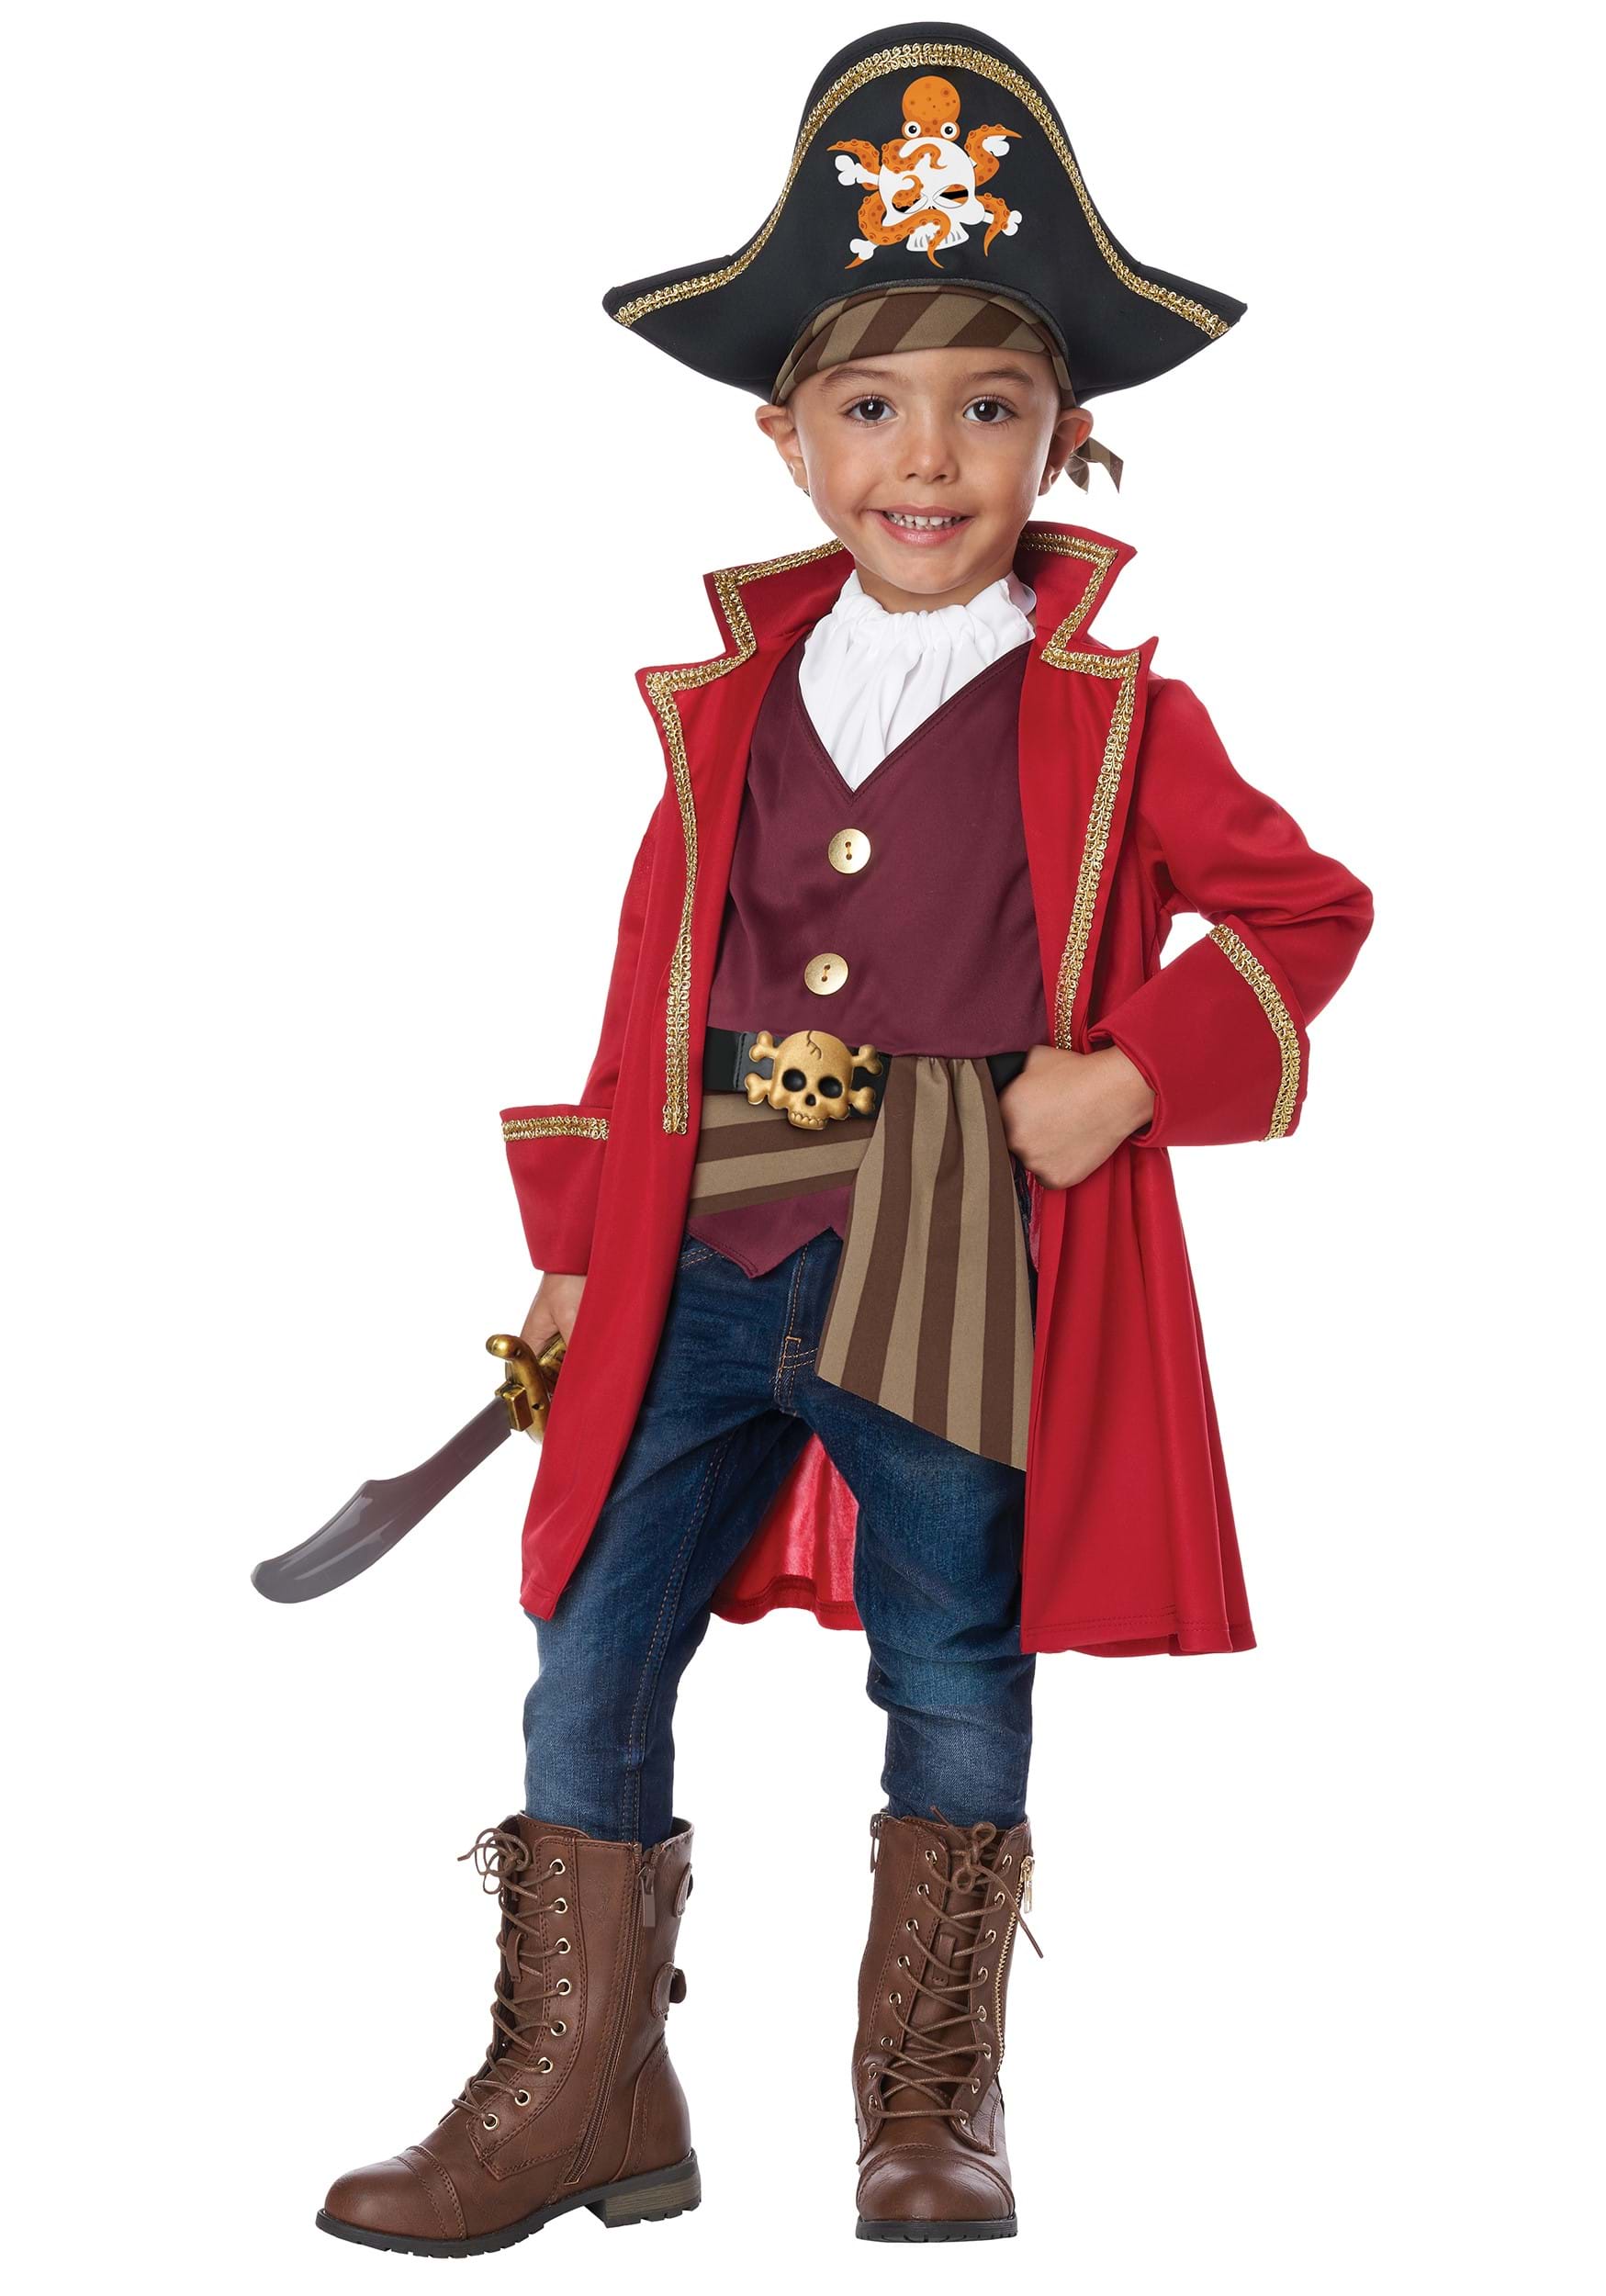 Boy's Cap'n Shorty Toddler Pirate Costume